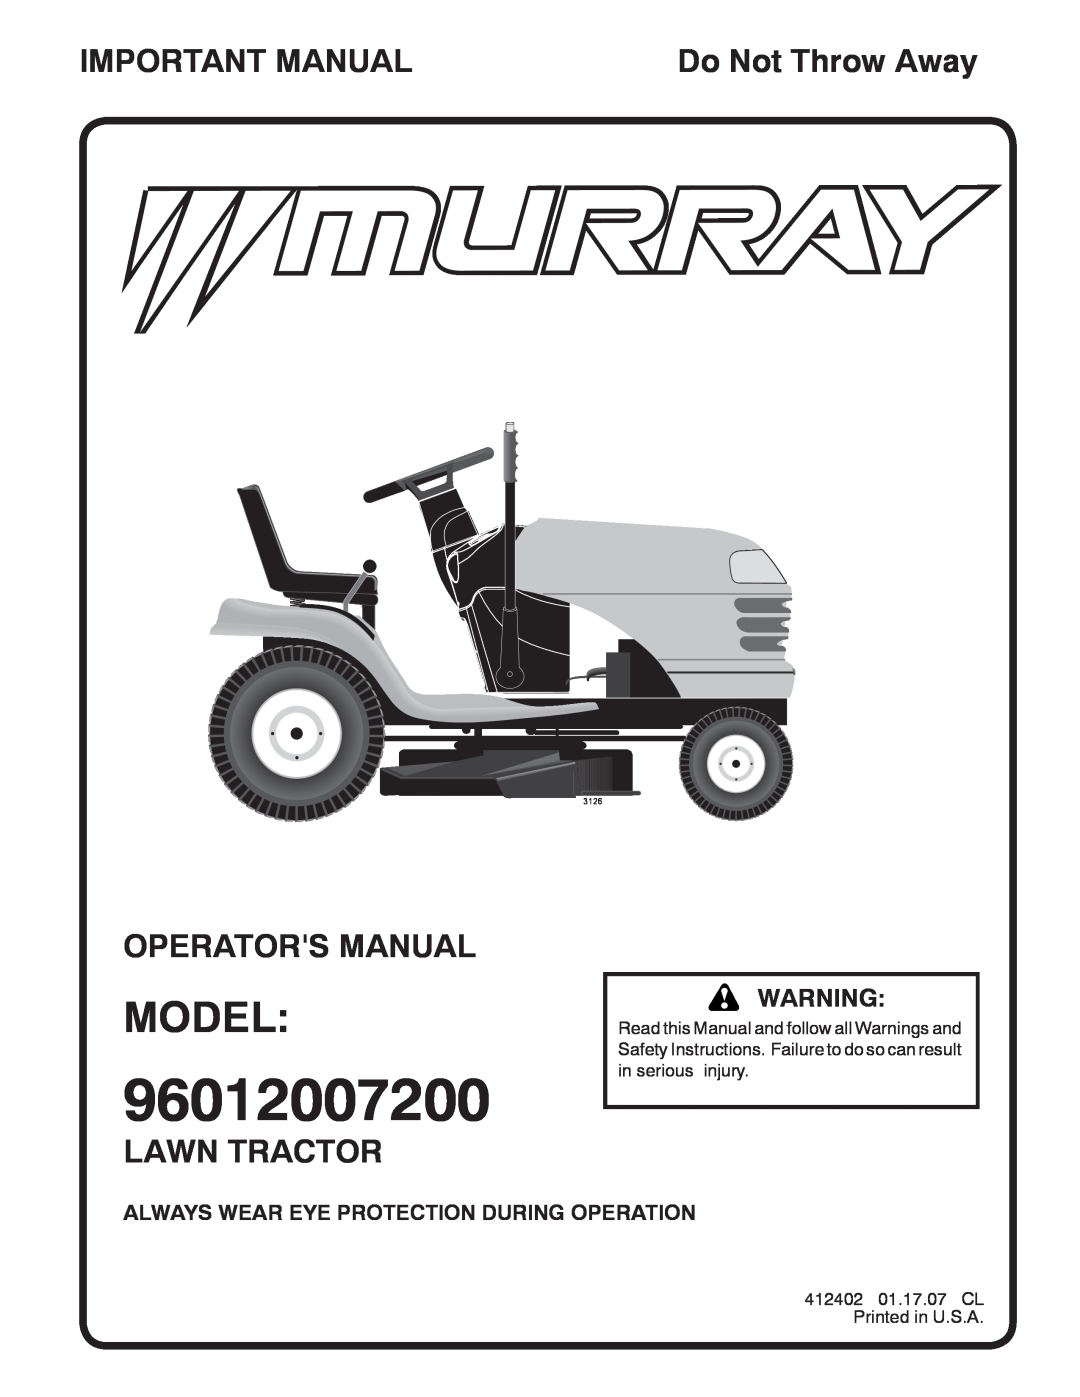 Murray 96012007200 manual Model, Important Manual, Operators Manual, Lawn Tractor, Do Not Throw Away, 3126 